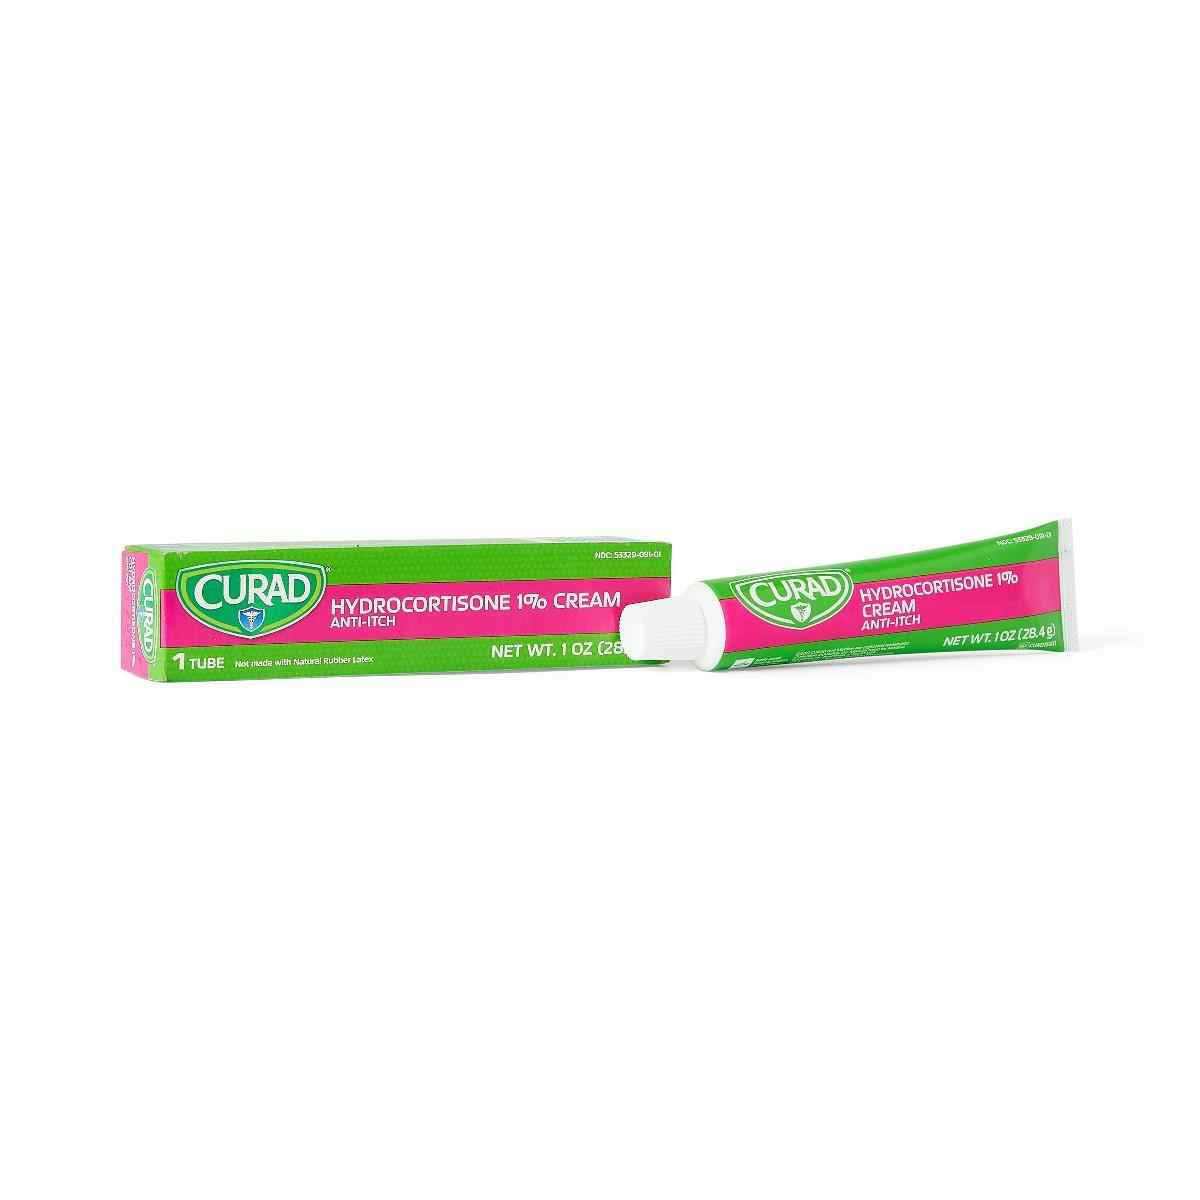 Curad Hydrocortisone Anti-Itch Cream, CUR015431, 1 oz. Tube - Case of 12